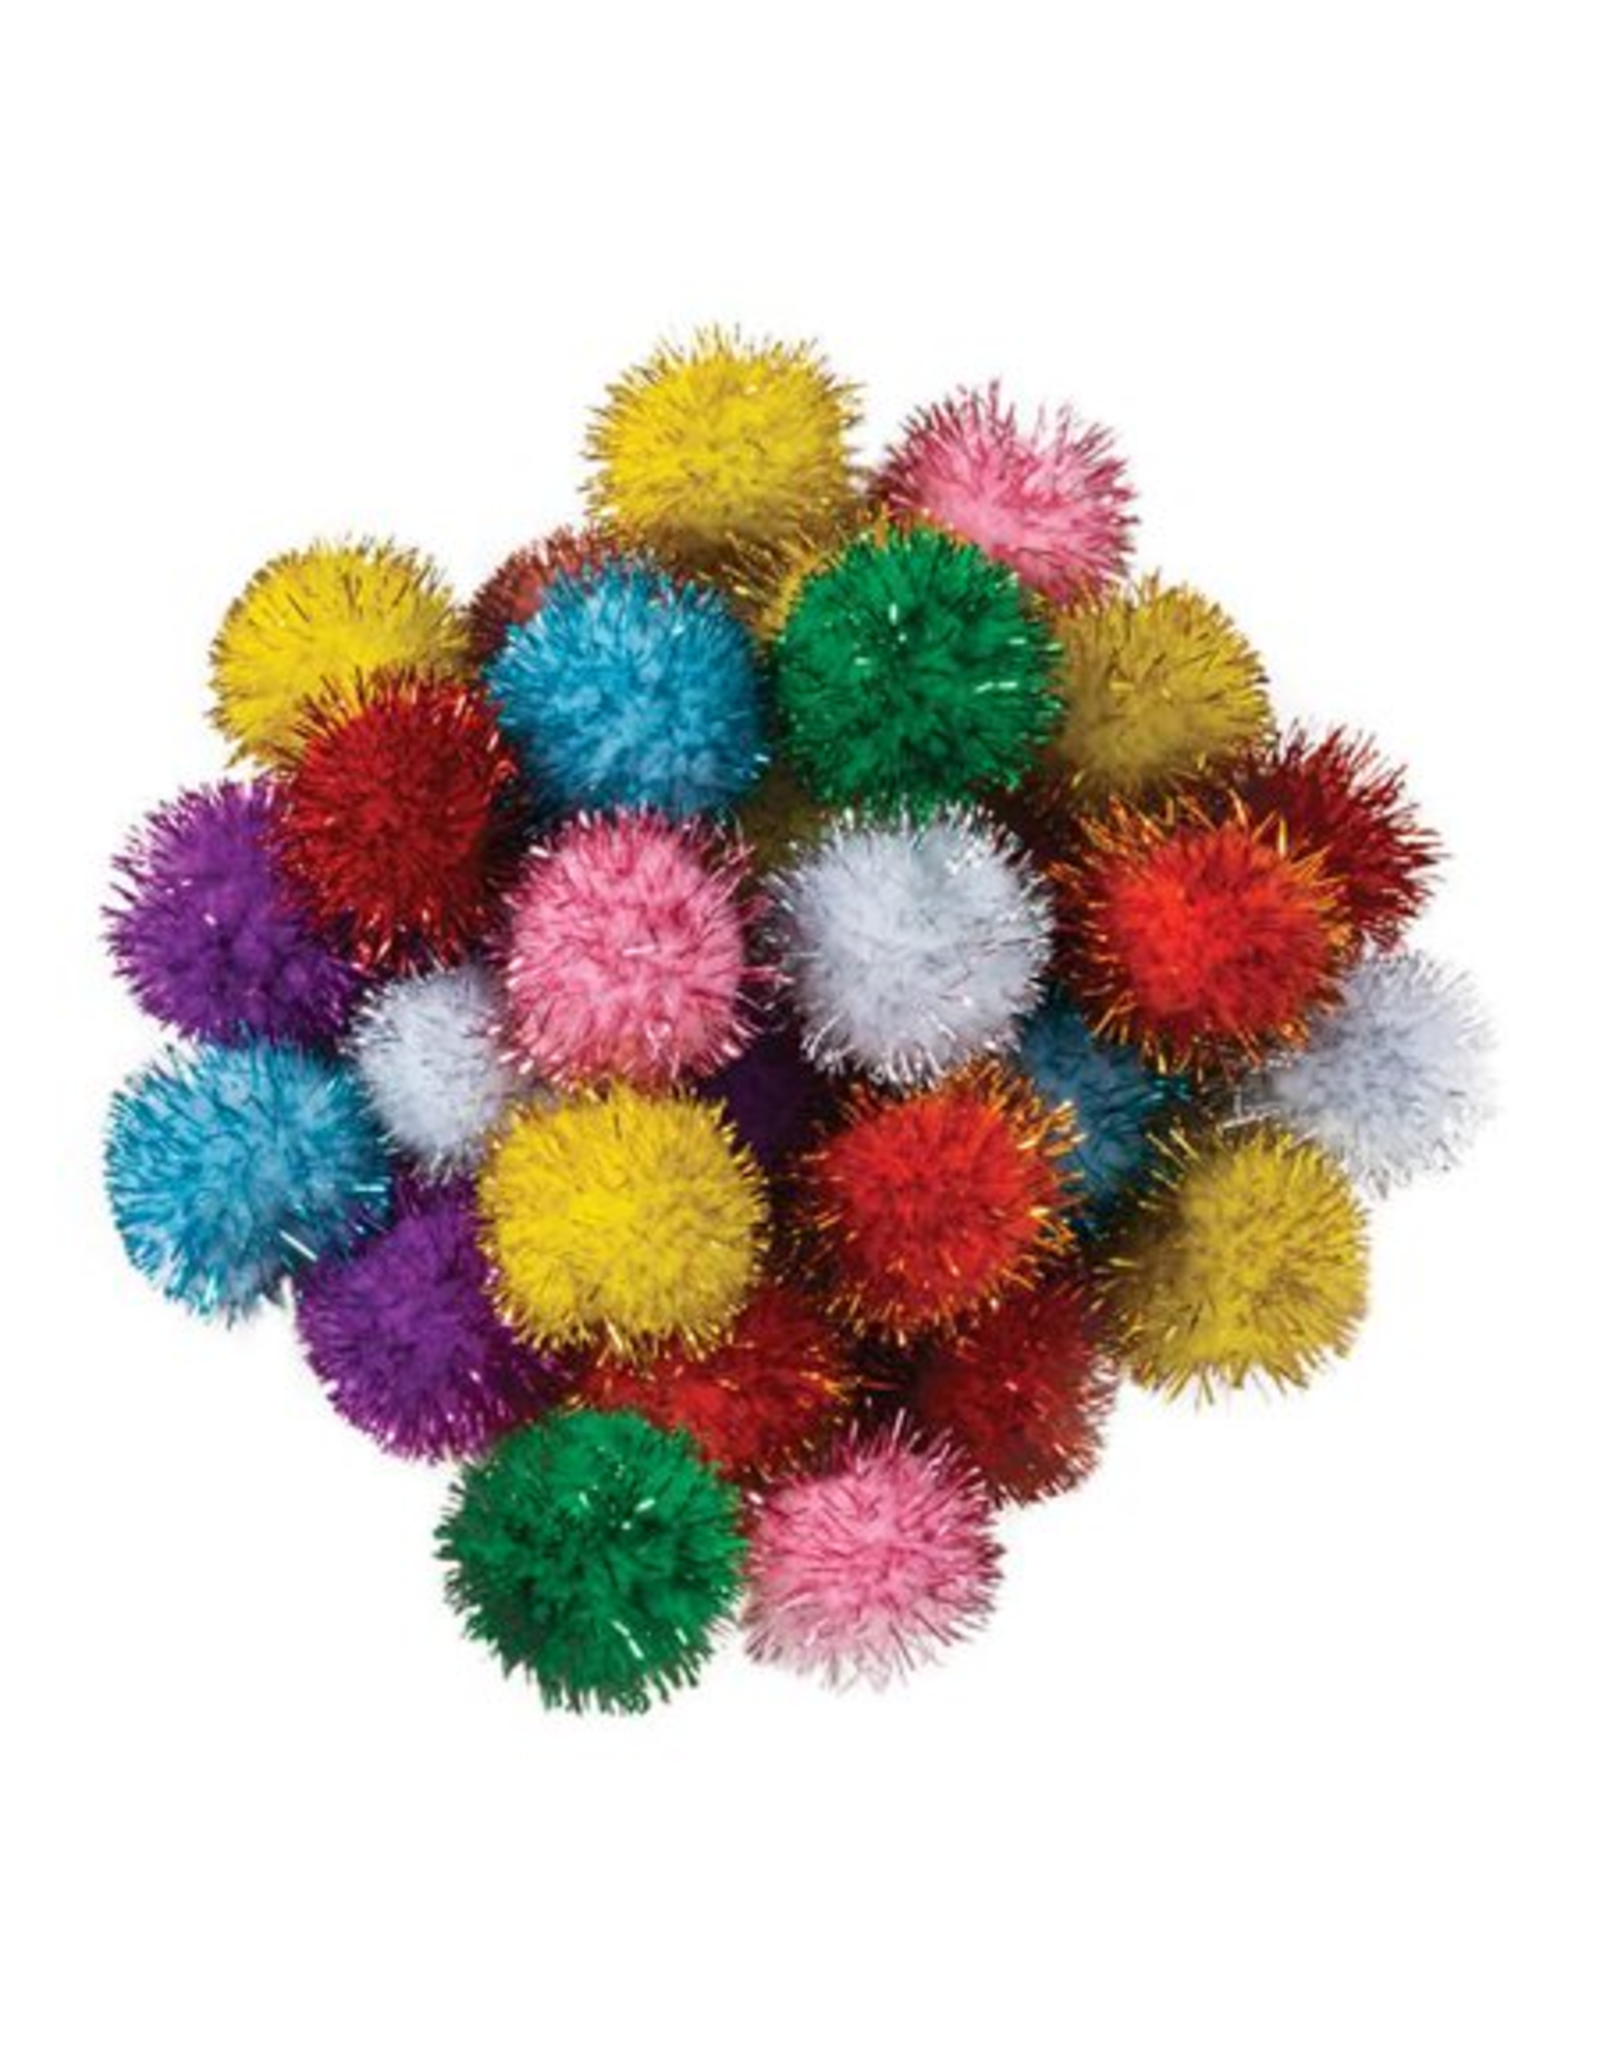 100pcs colorful pom pom balls 20mm Pompoms Assorted Pompoms Crafts Cat Toys  for